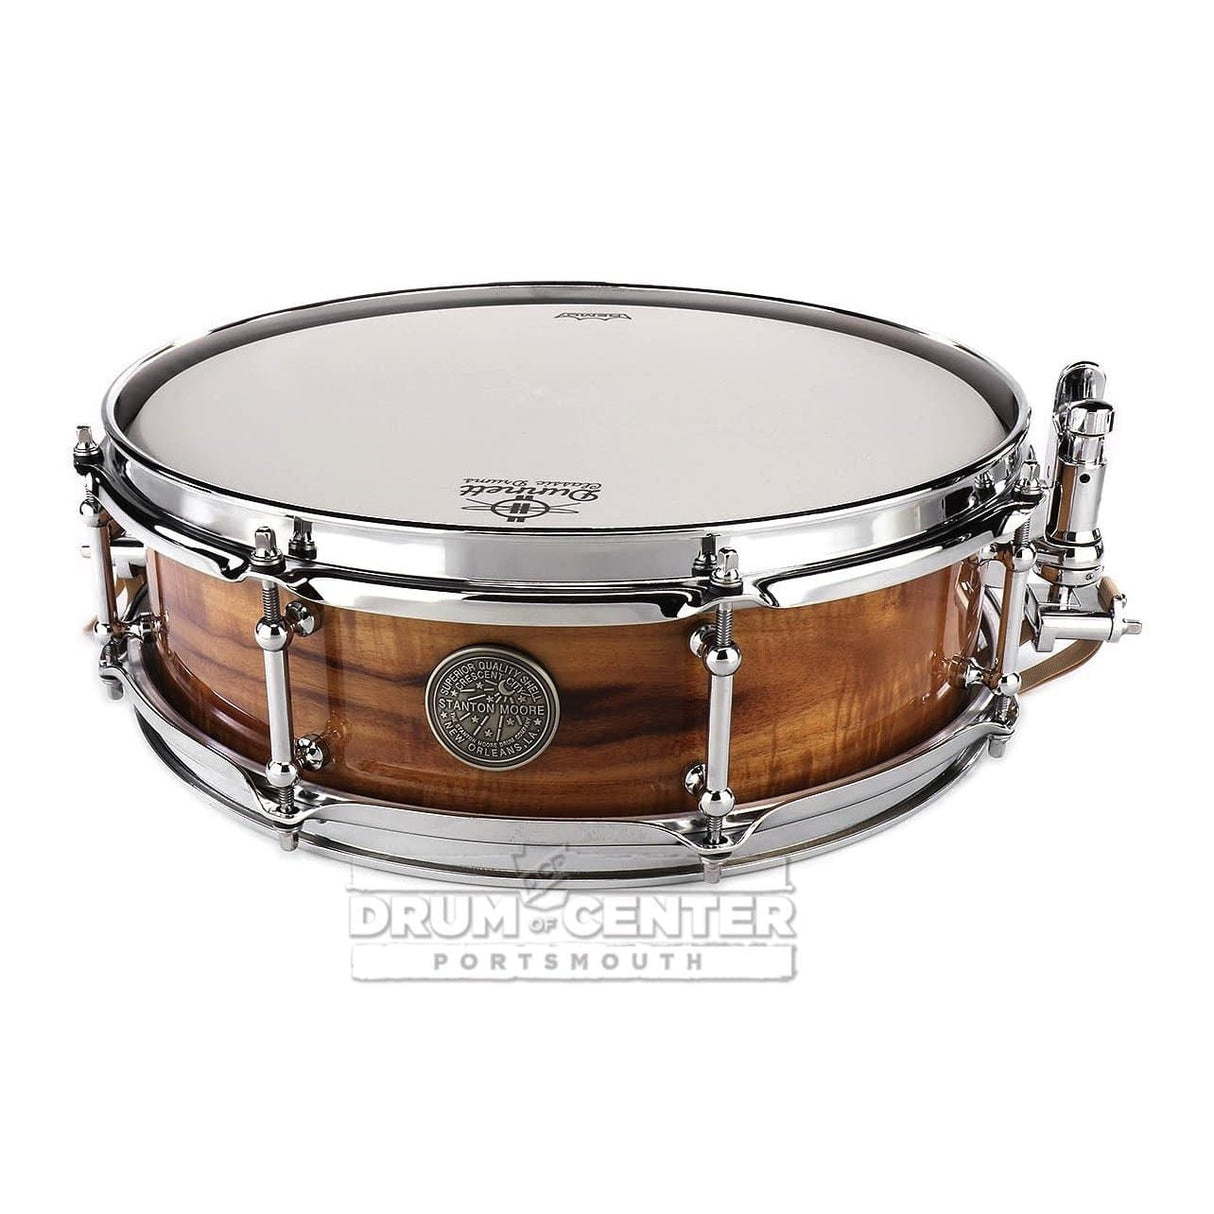 Stanton Moore Spirit of New Orleans Acacia Snare Drum 14x4.5